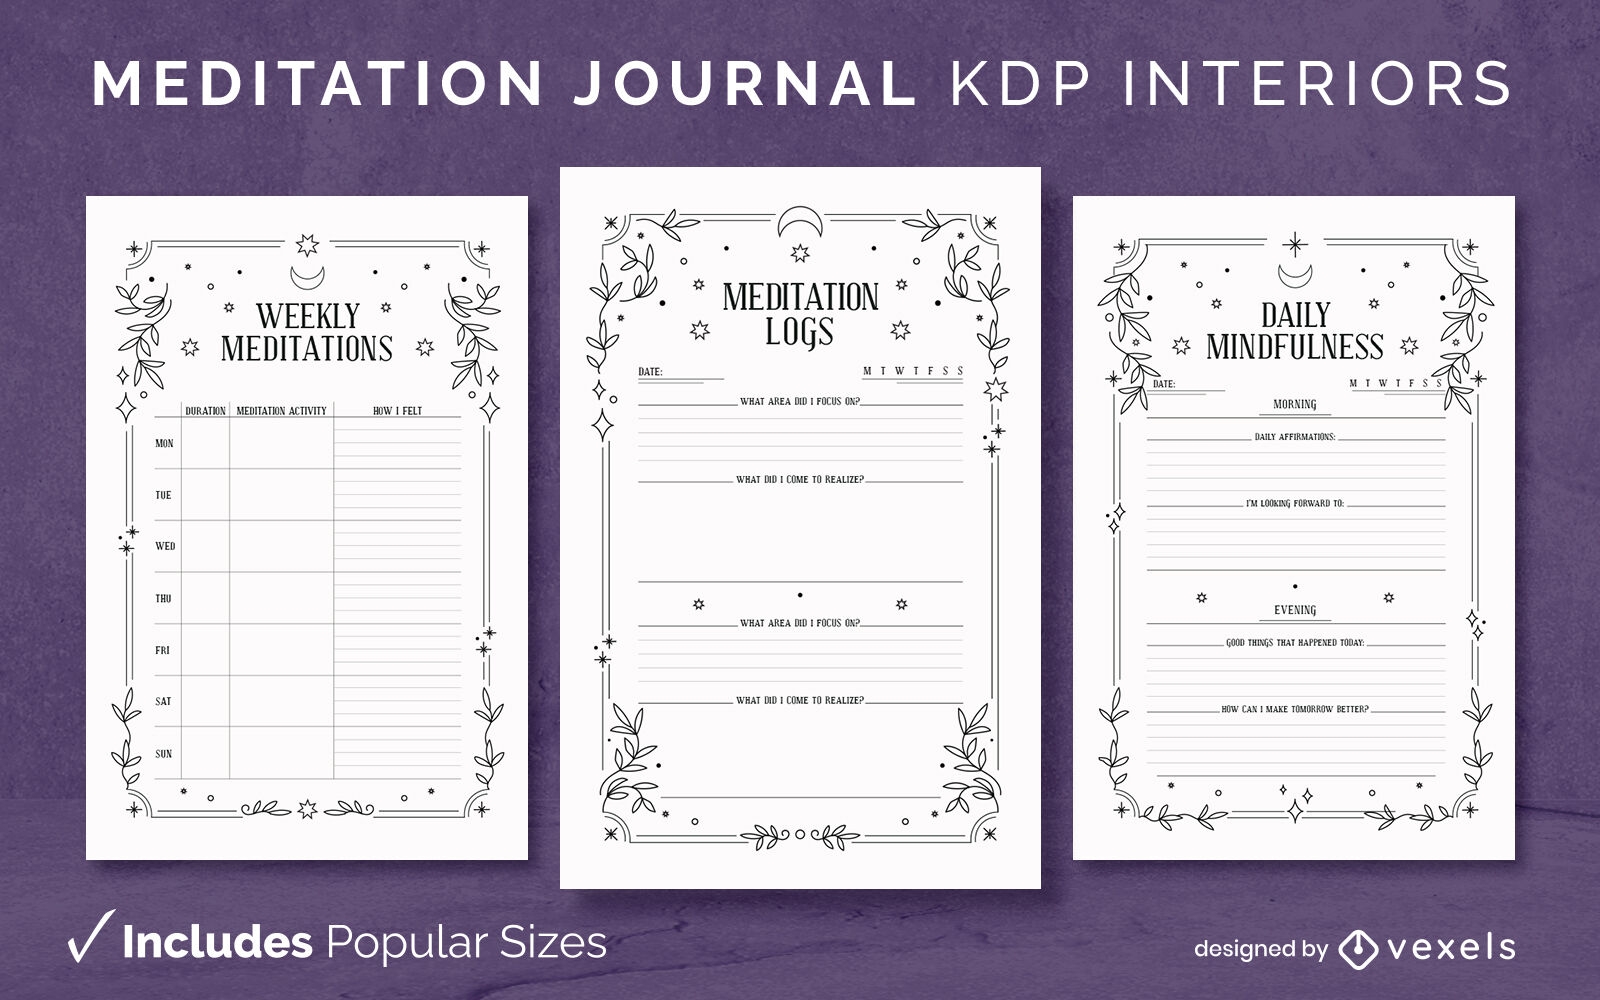 Mystic meditation Journal Design Template KDP